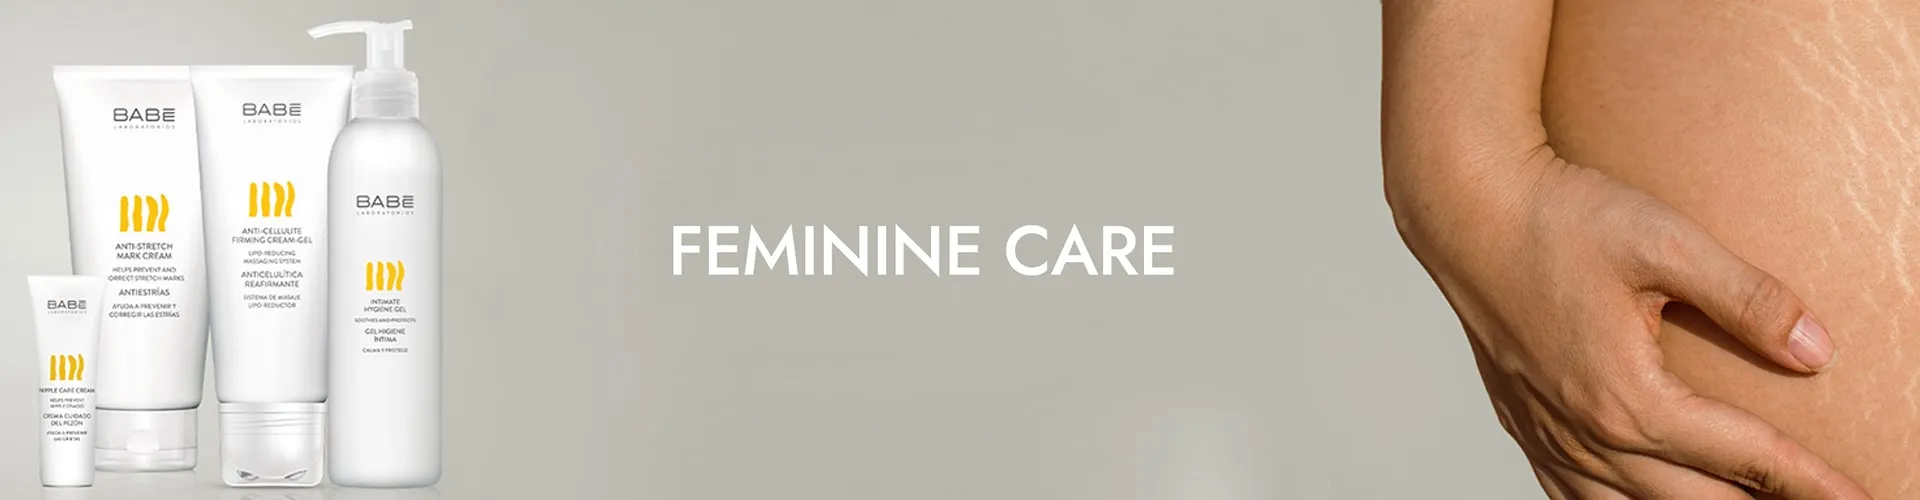 category_feminine_care-min